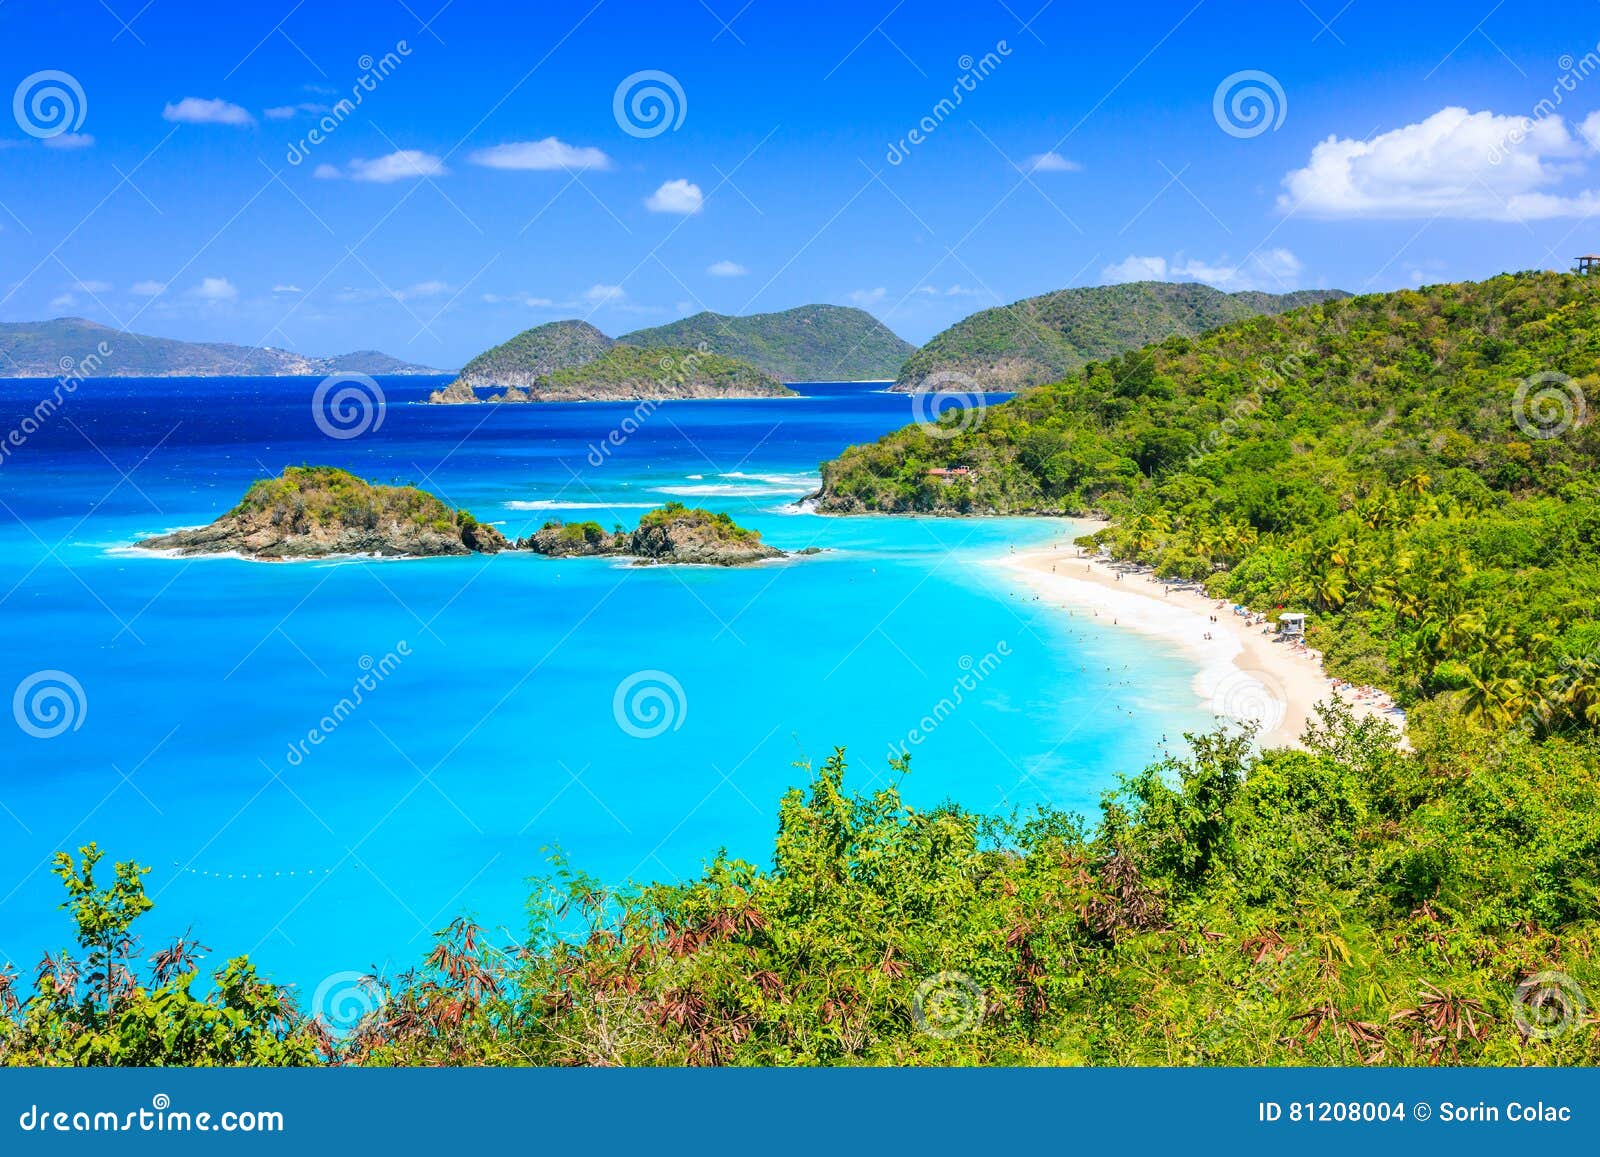 US Virgin Islands stock photo. Image of virgin, turquoise - 81208004